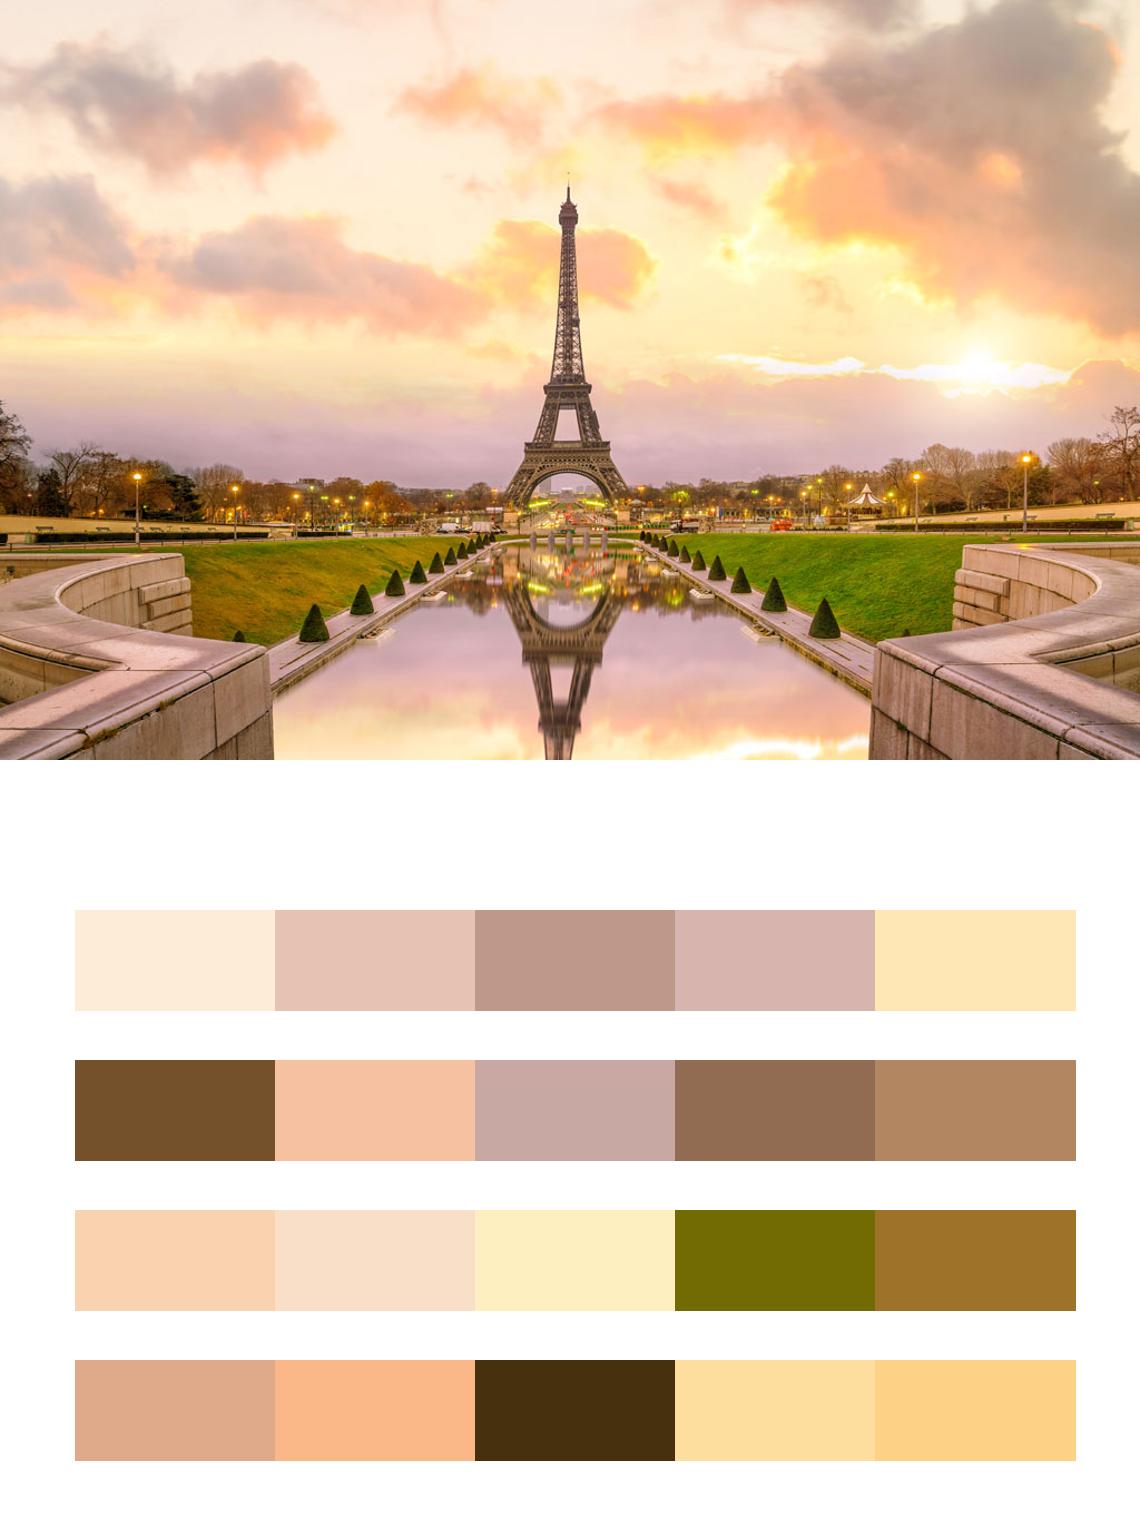 Башня Париж во время заката цвета